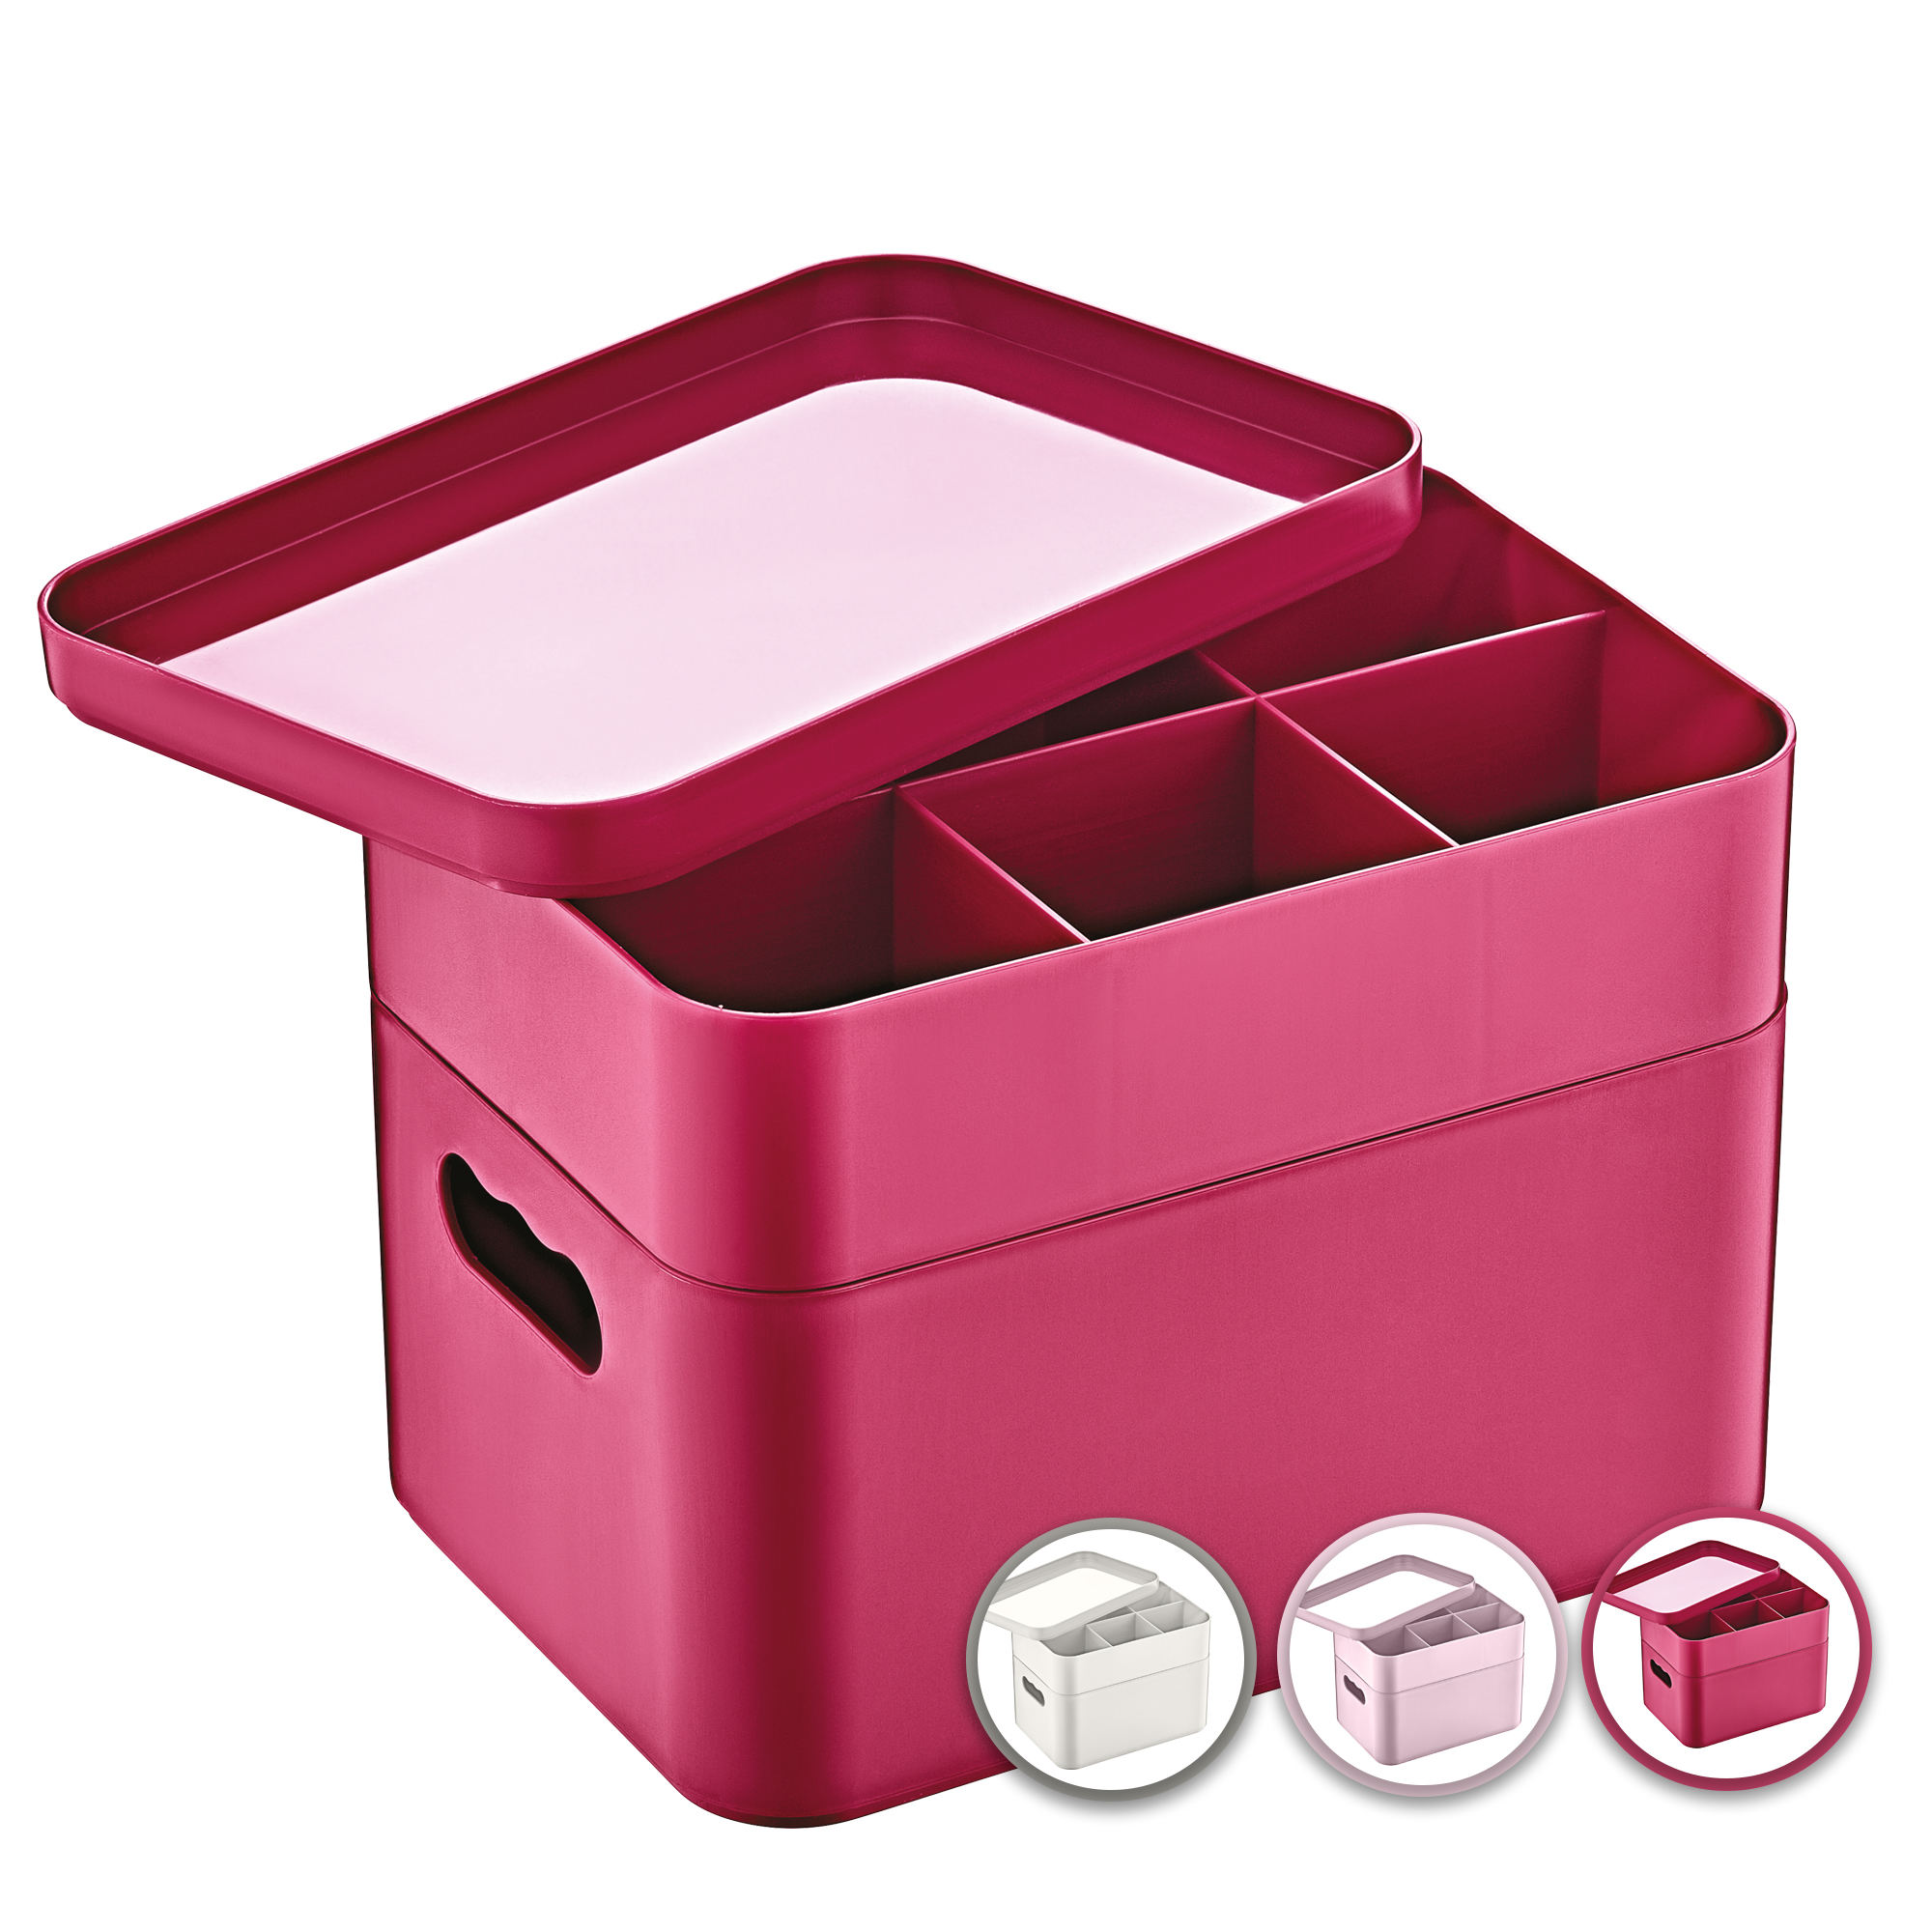 Herzberg HG-OKY676: 2 Layer Multipurpose Organizer Box